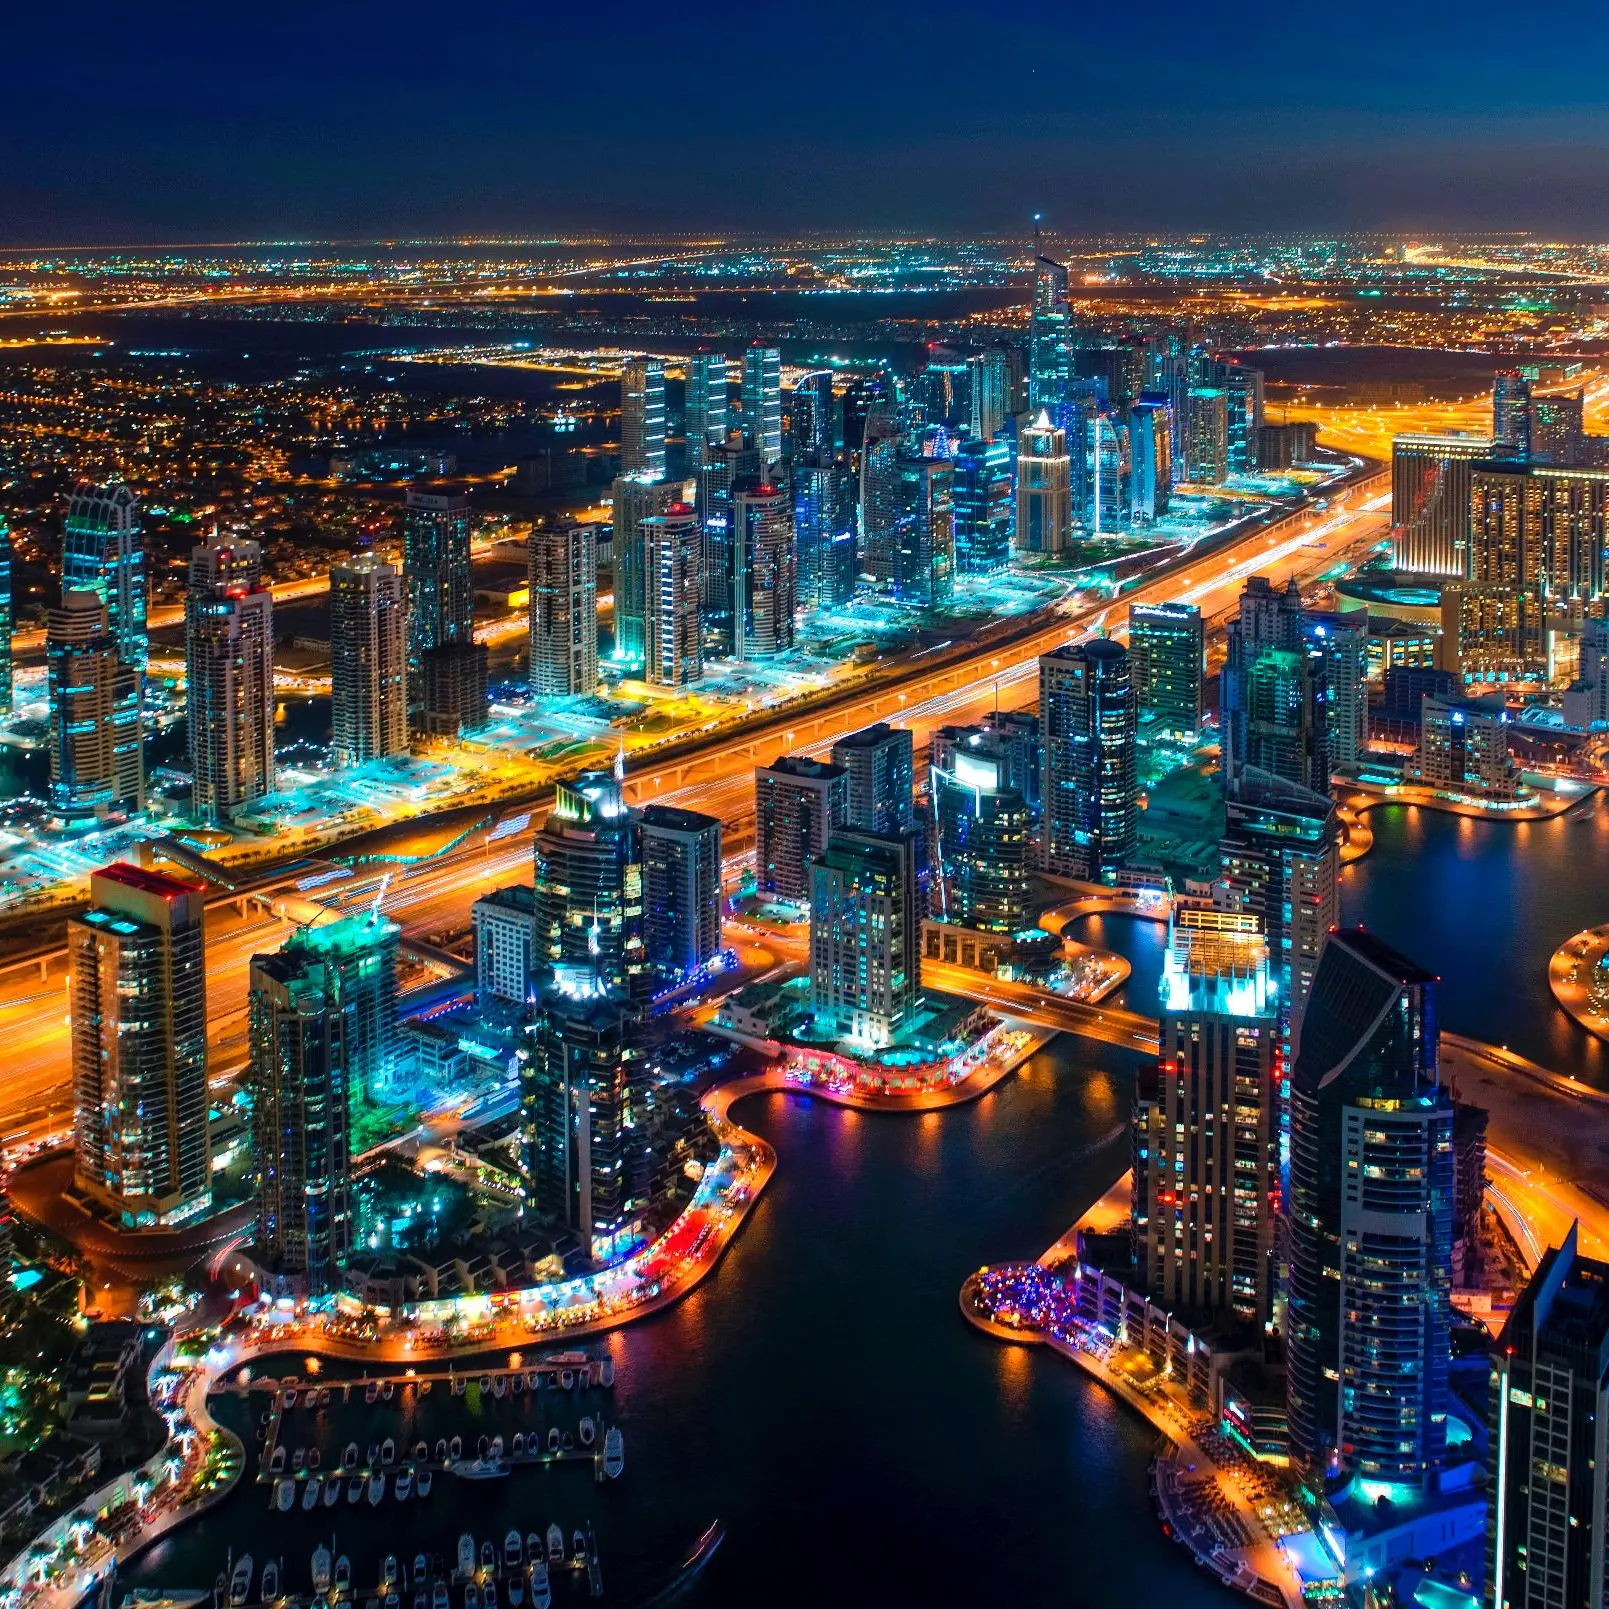 Dubai Economy issues 15,475 new licences in Q1 2021